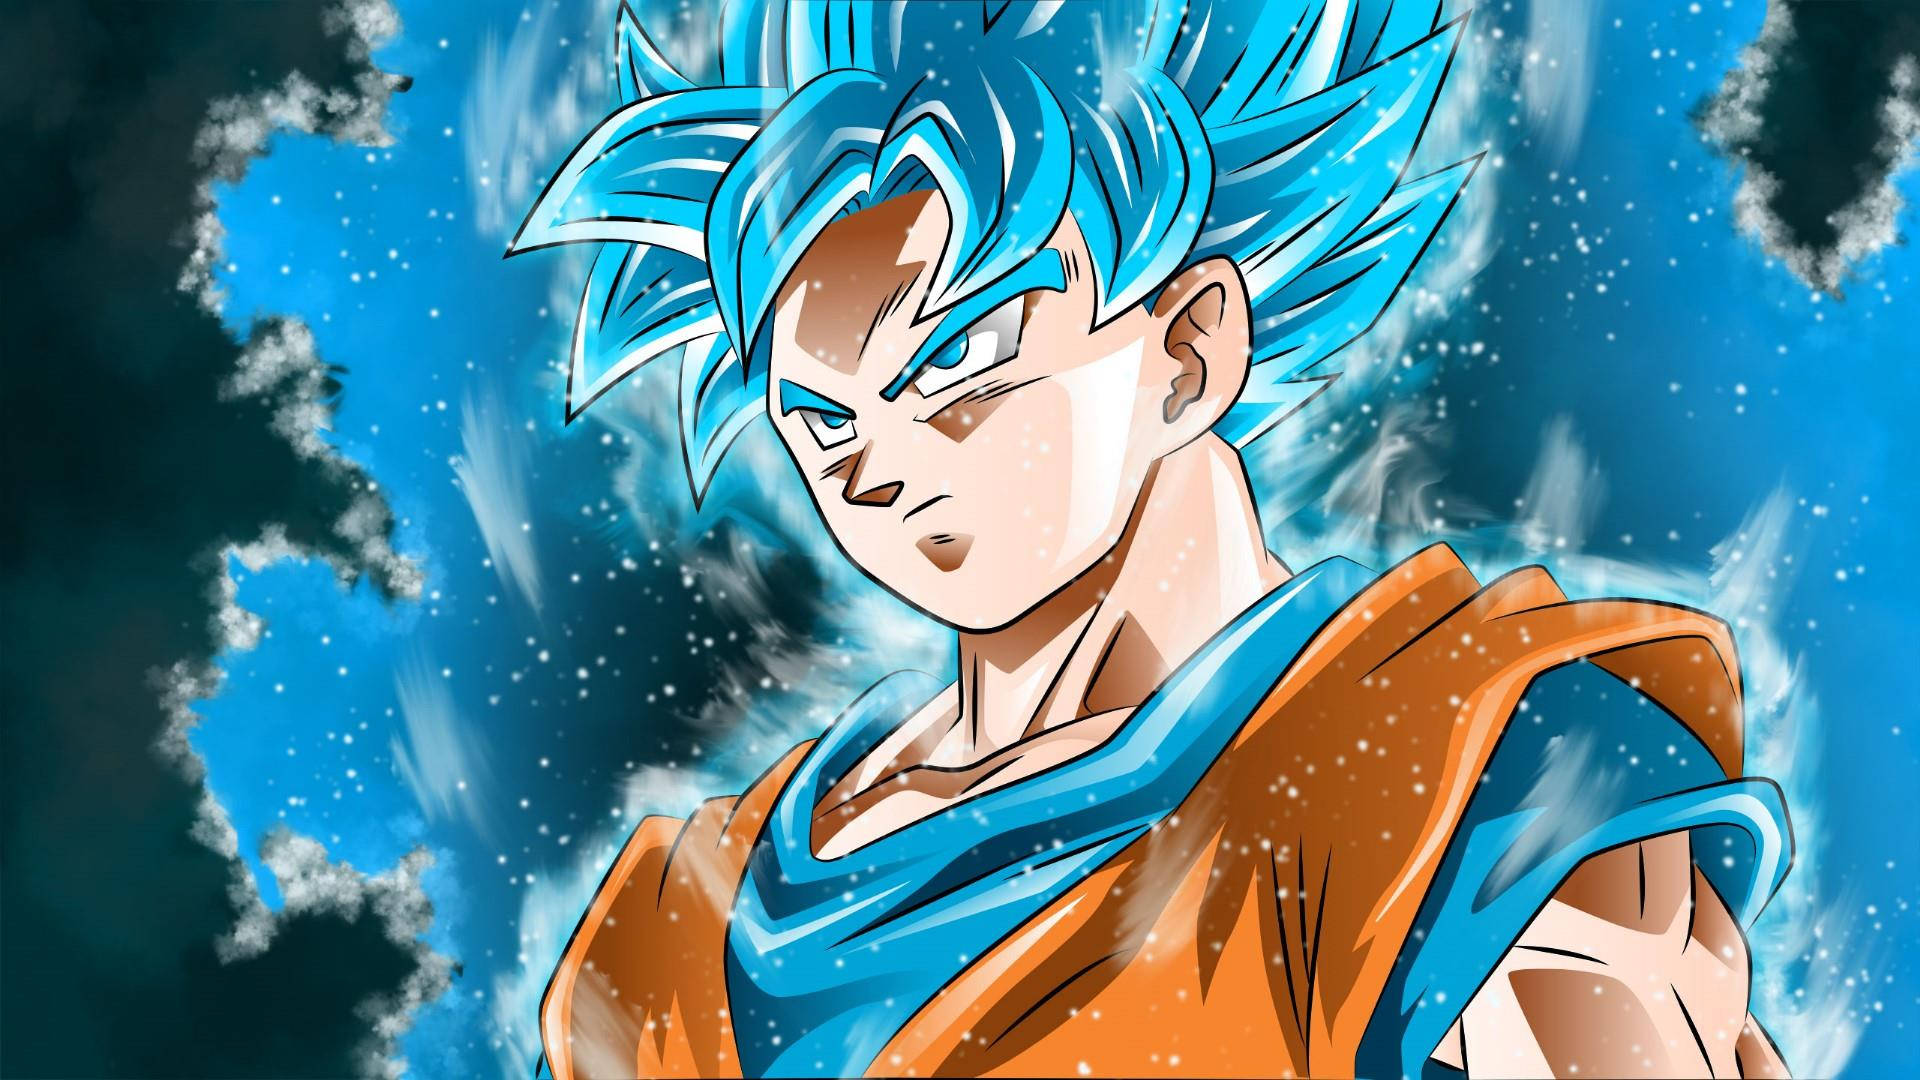 Goku 1920X1080 Wallpaper and Background Image